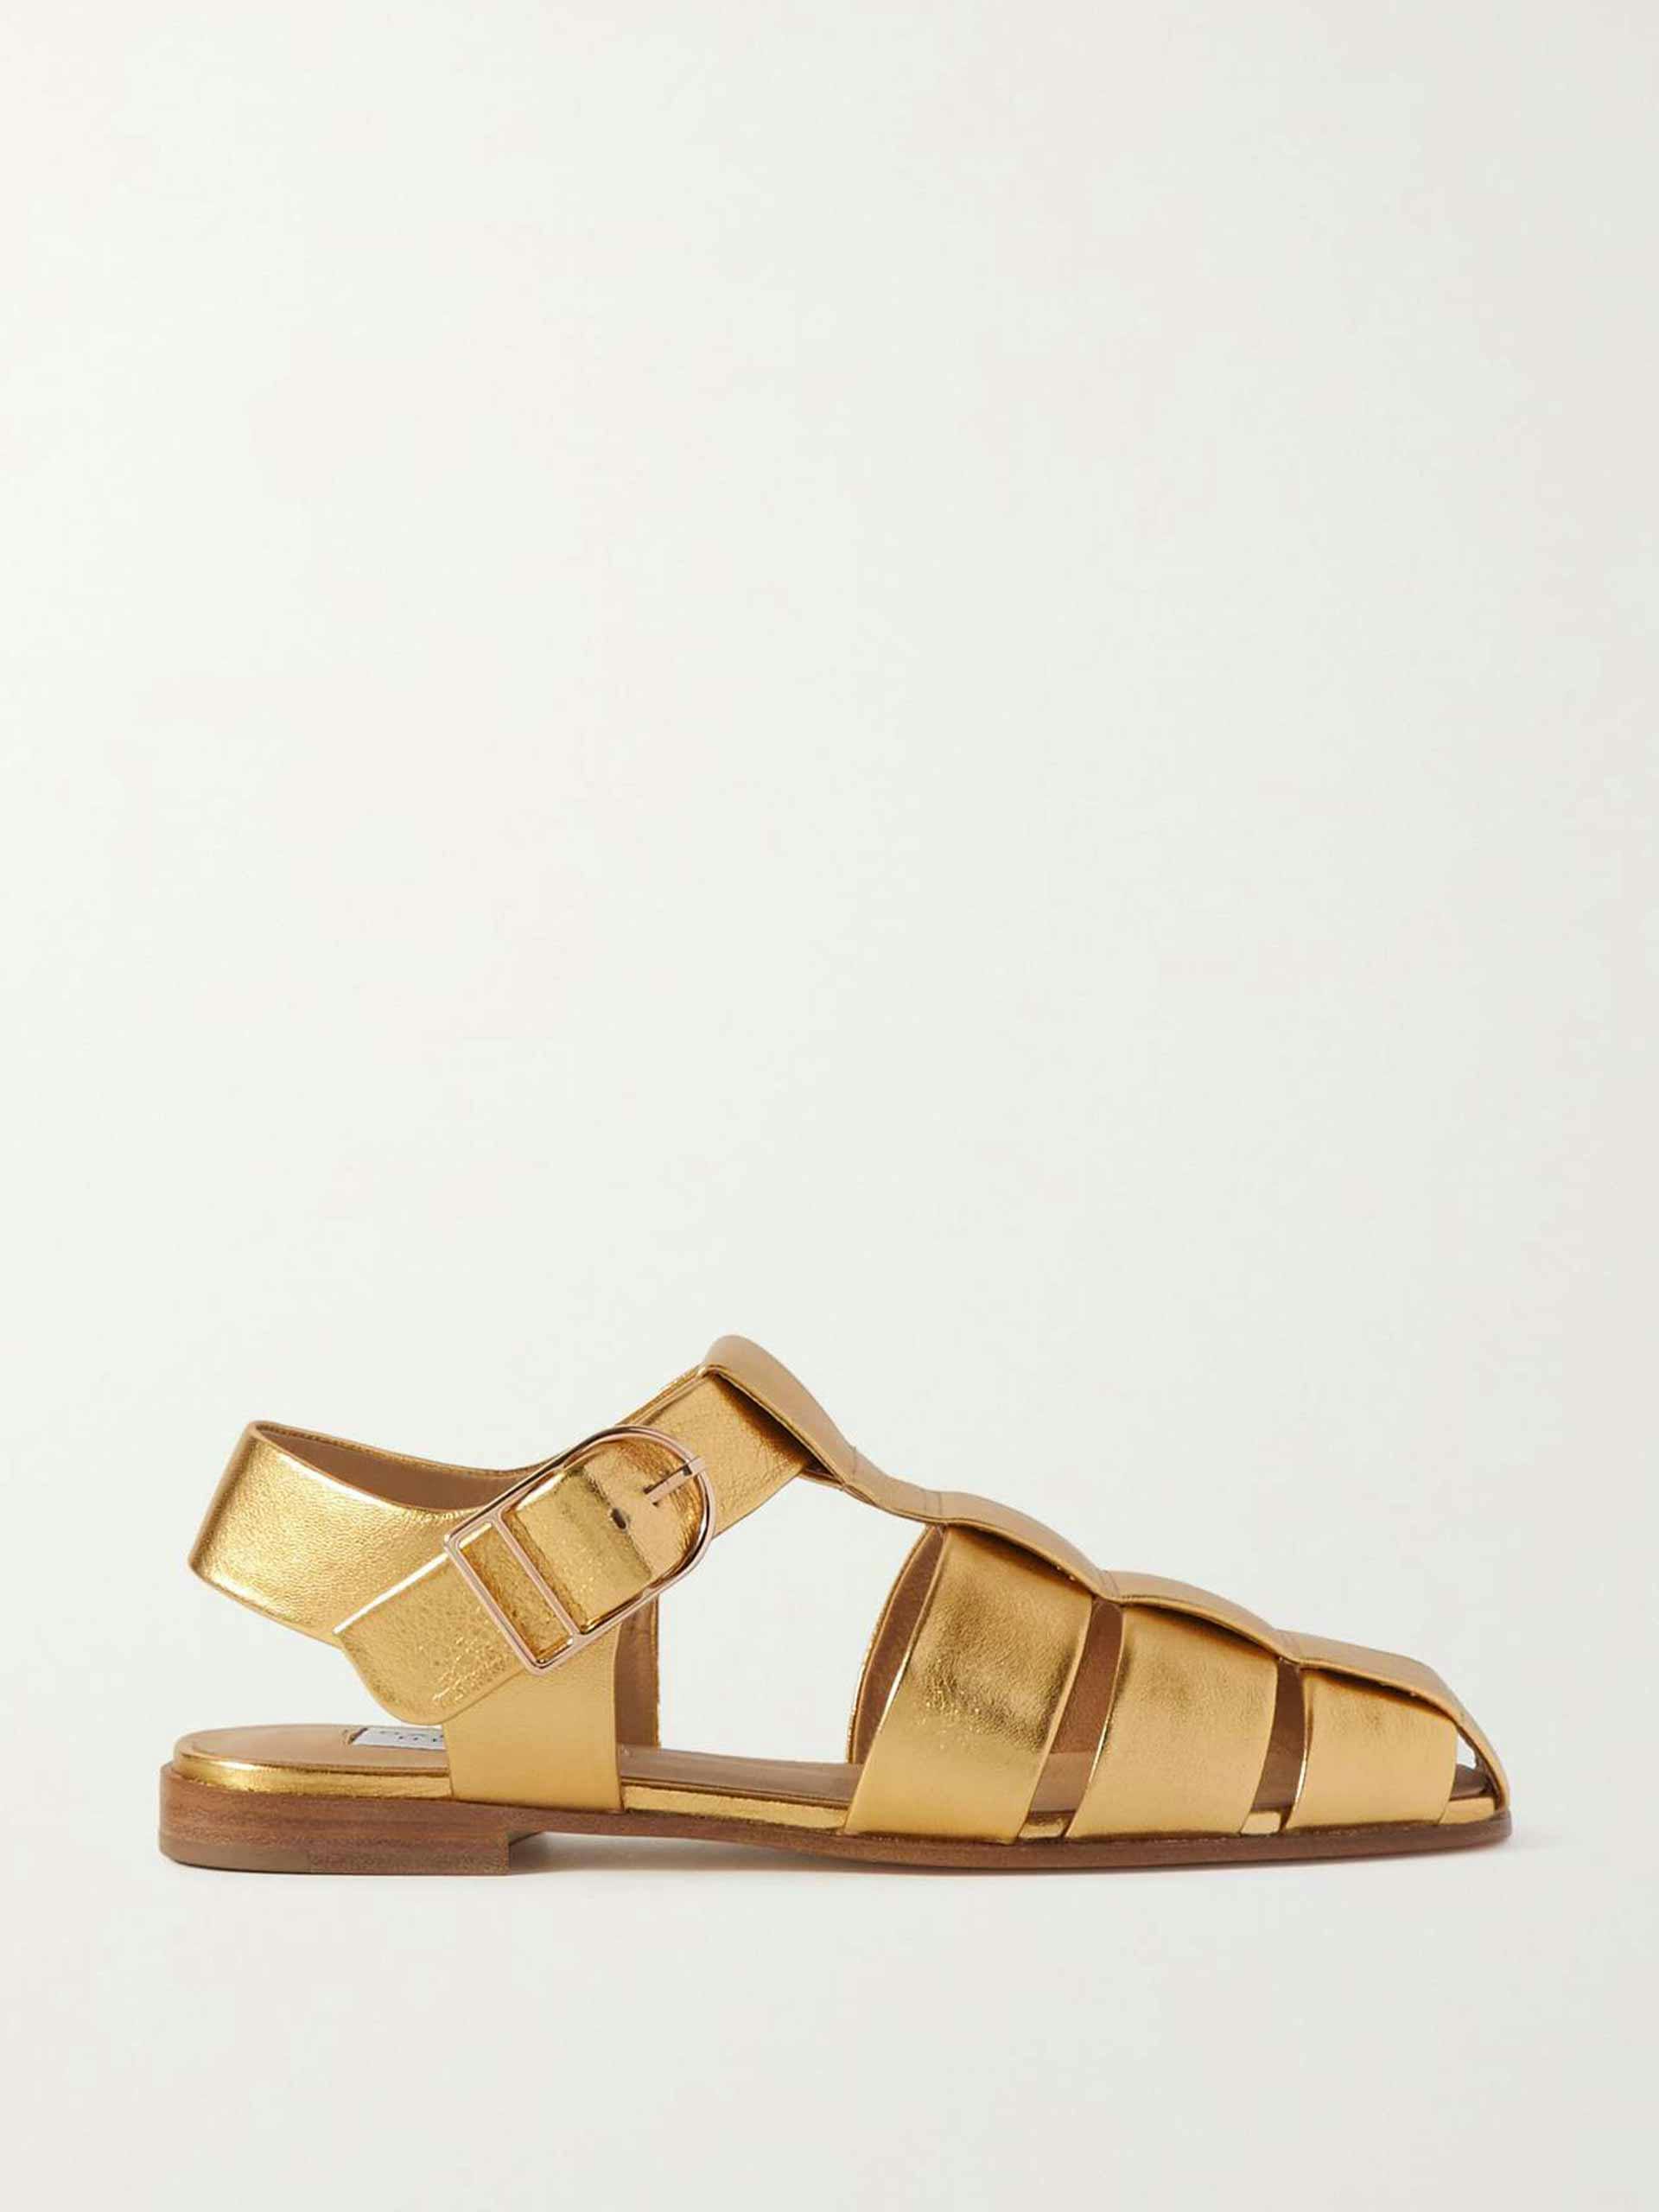 Metallic gold leather sandals